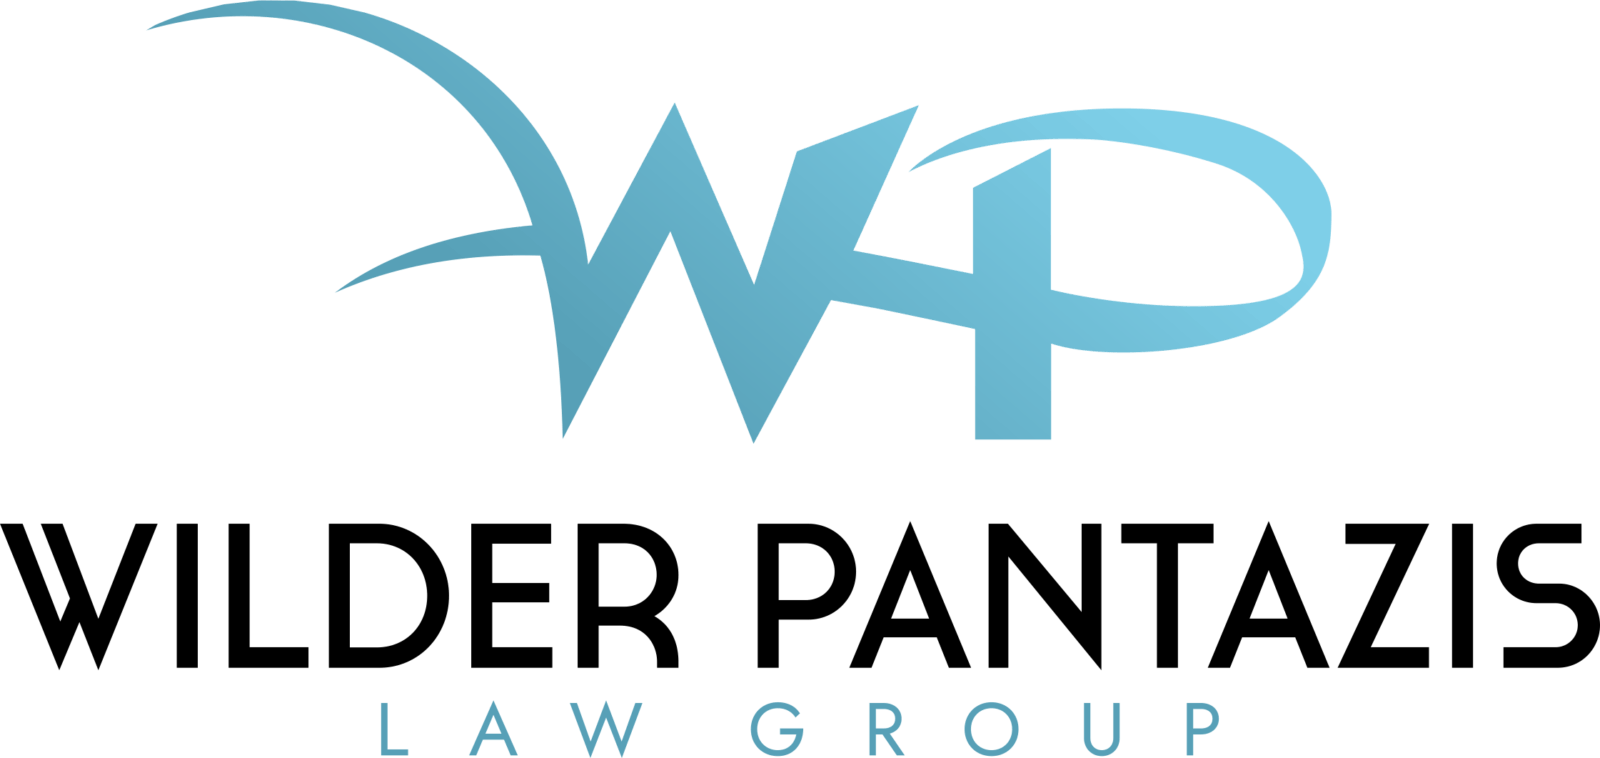 Wilder Pantazis Law Firm